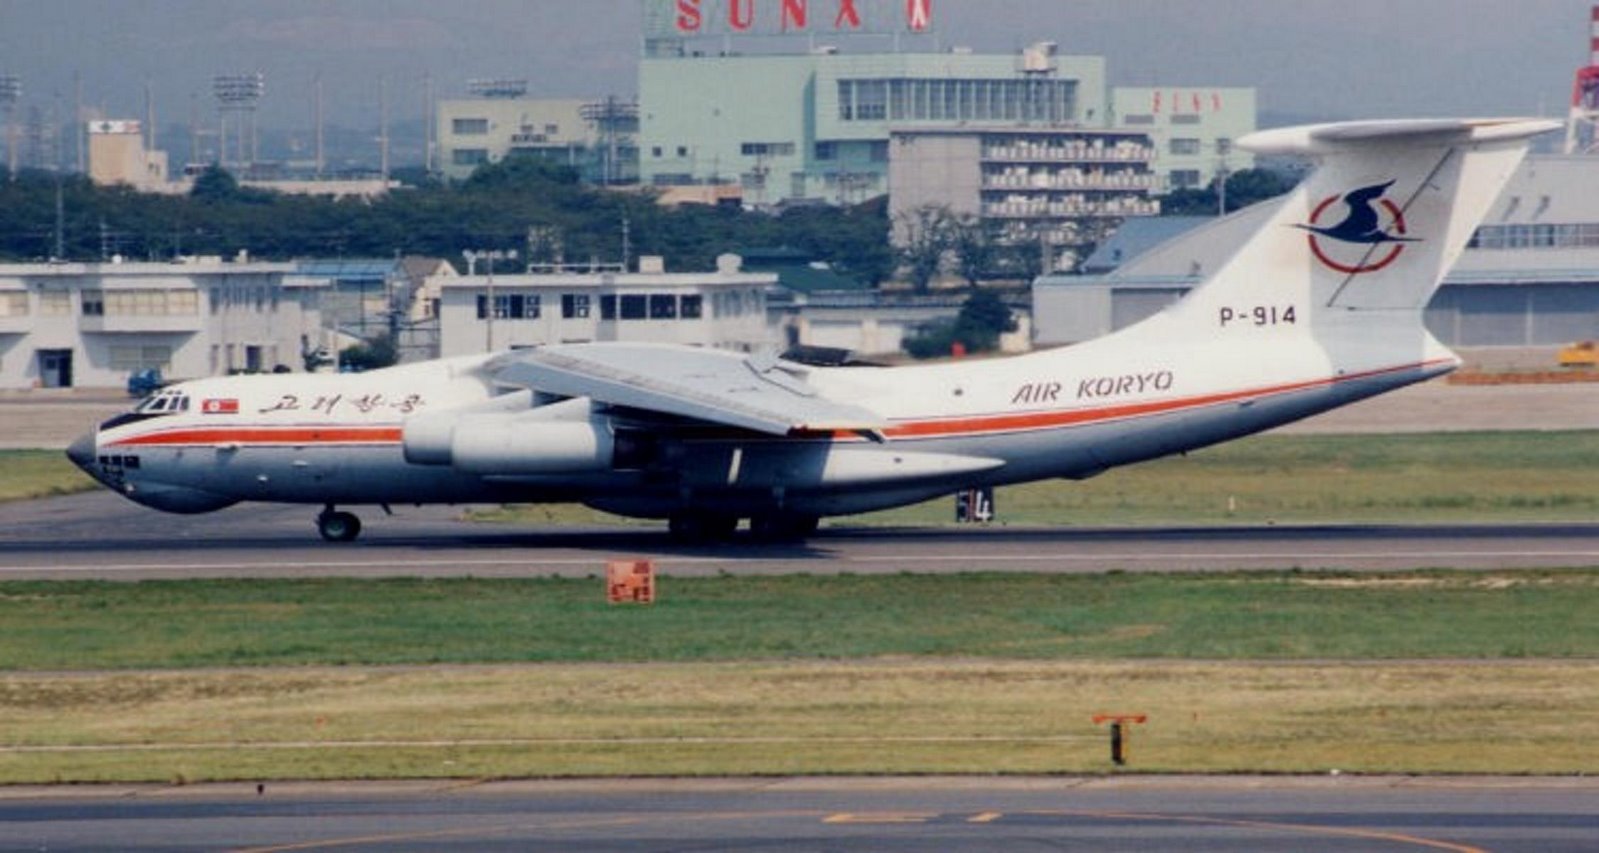 [IL-76MD+P-914+JAPON+1996.JPG]